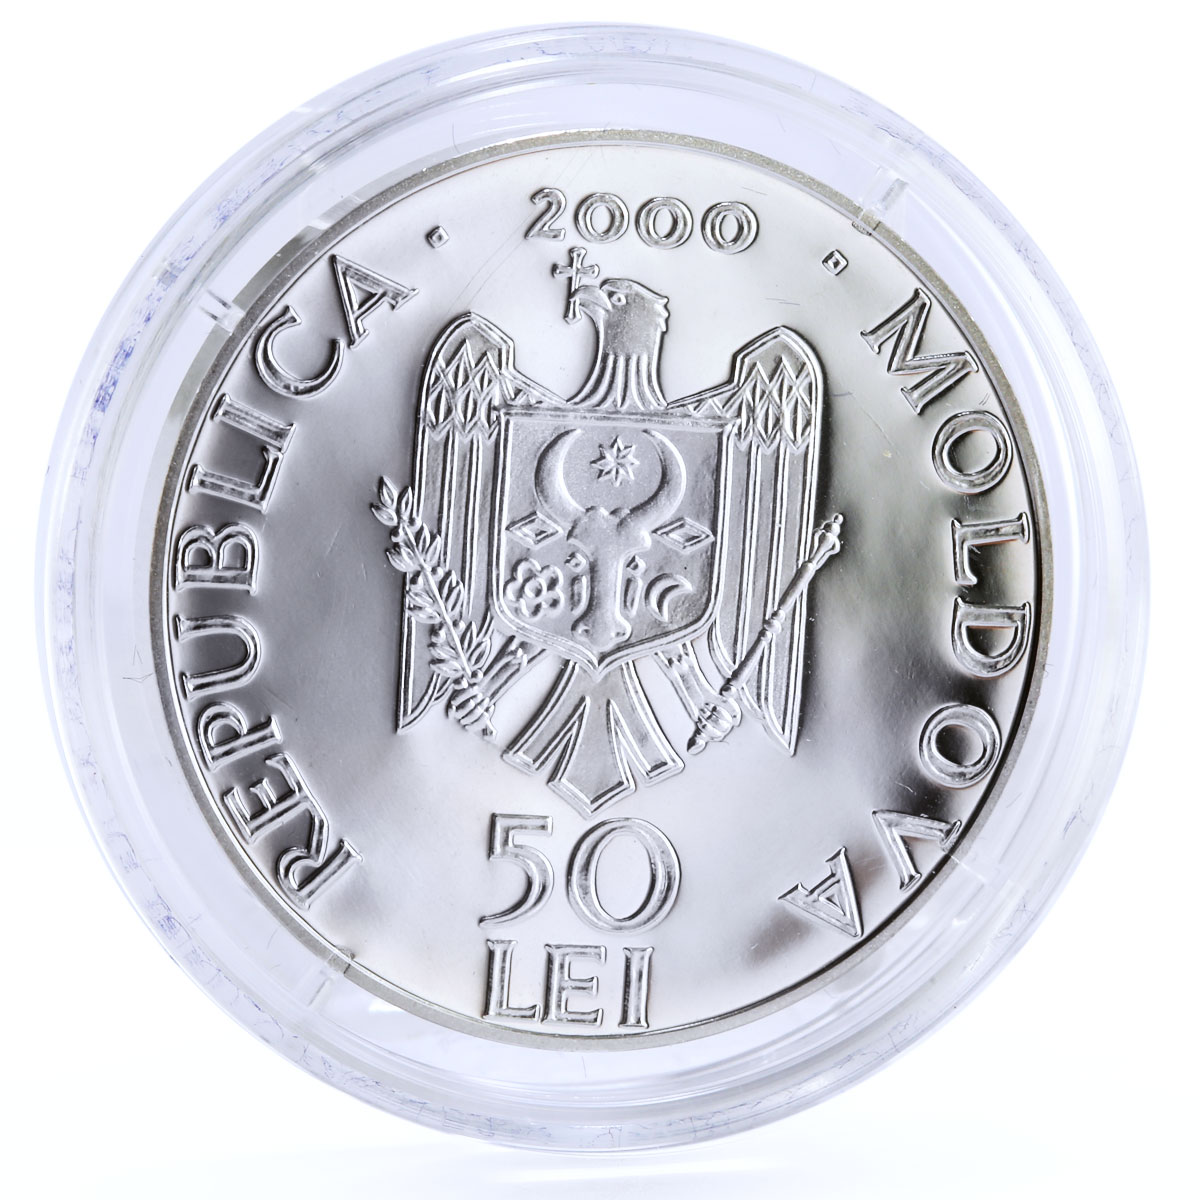 Moldova 50 lei Monastery Dobrusha Landscape Cathedral Church silver coin 2000